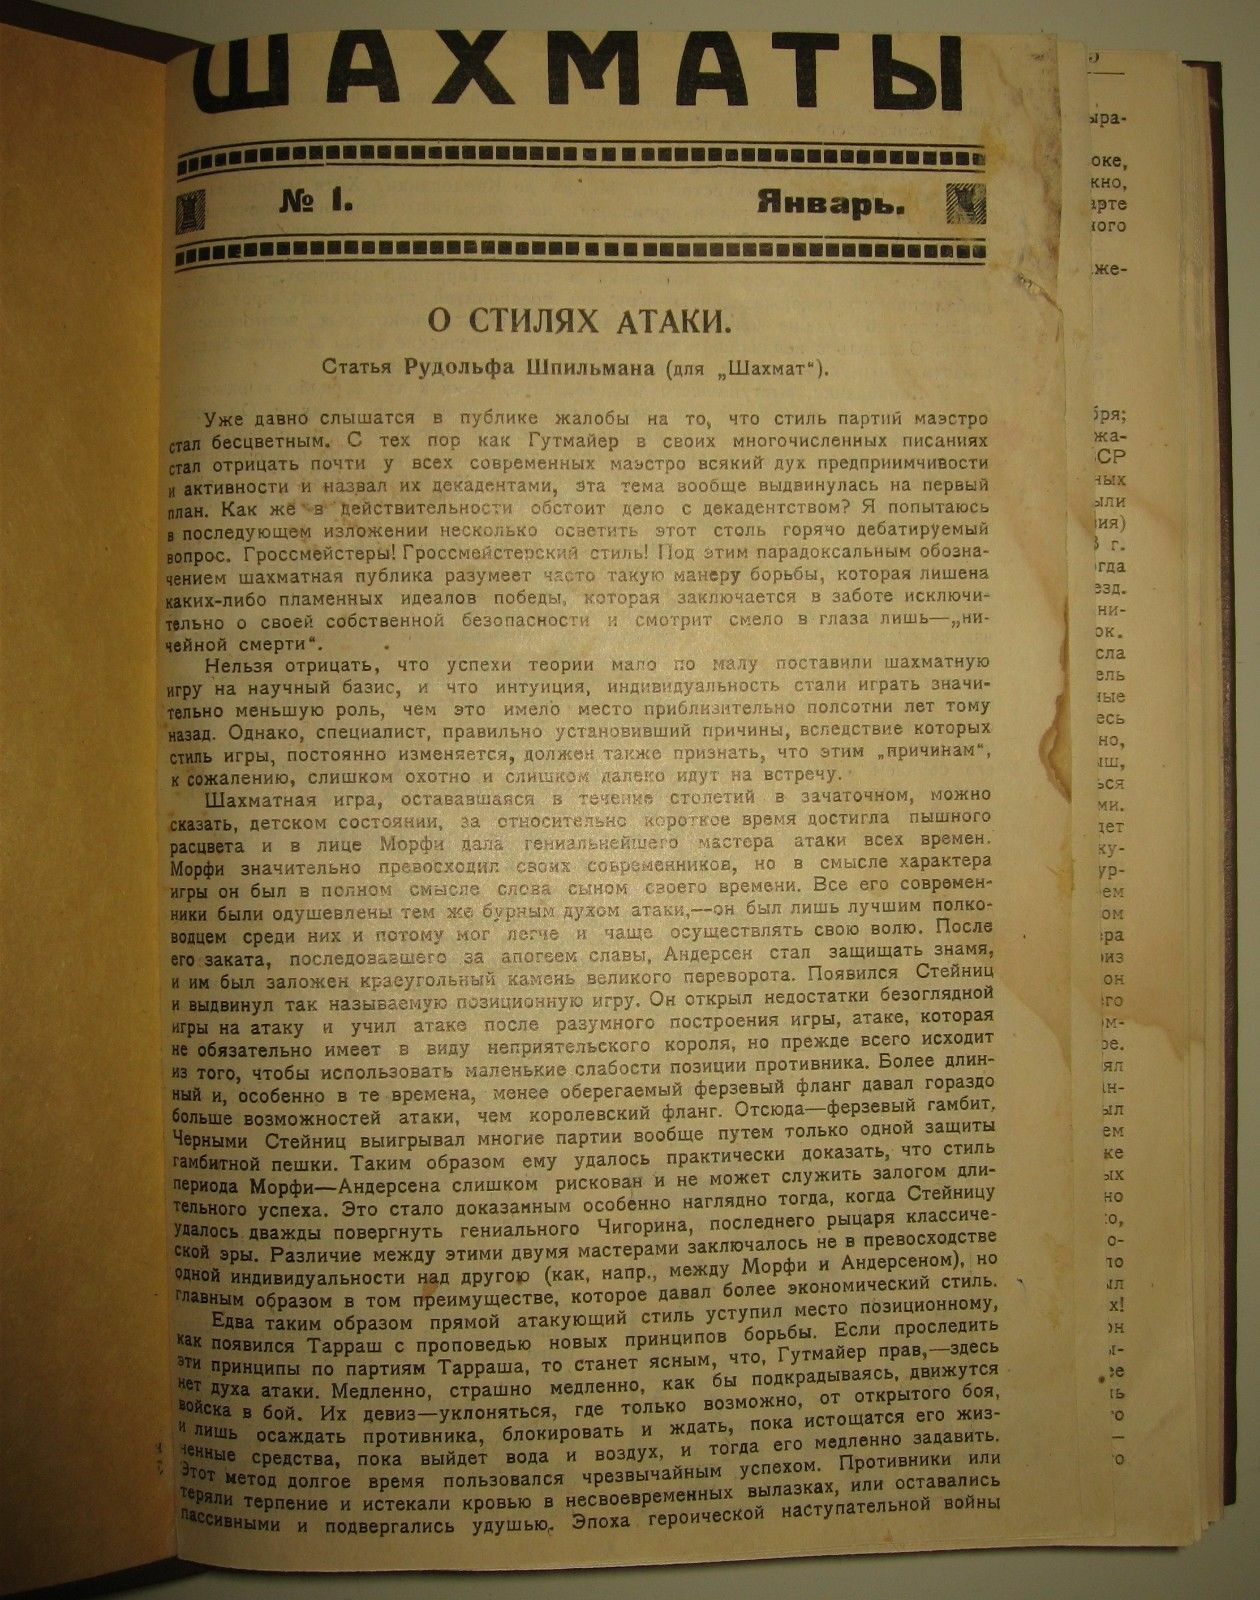 10896.Antique Russian Chess Magazine «Shakhmaty» («Chess»). Complete set. Grekov, 1927